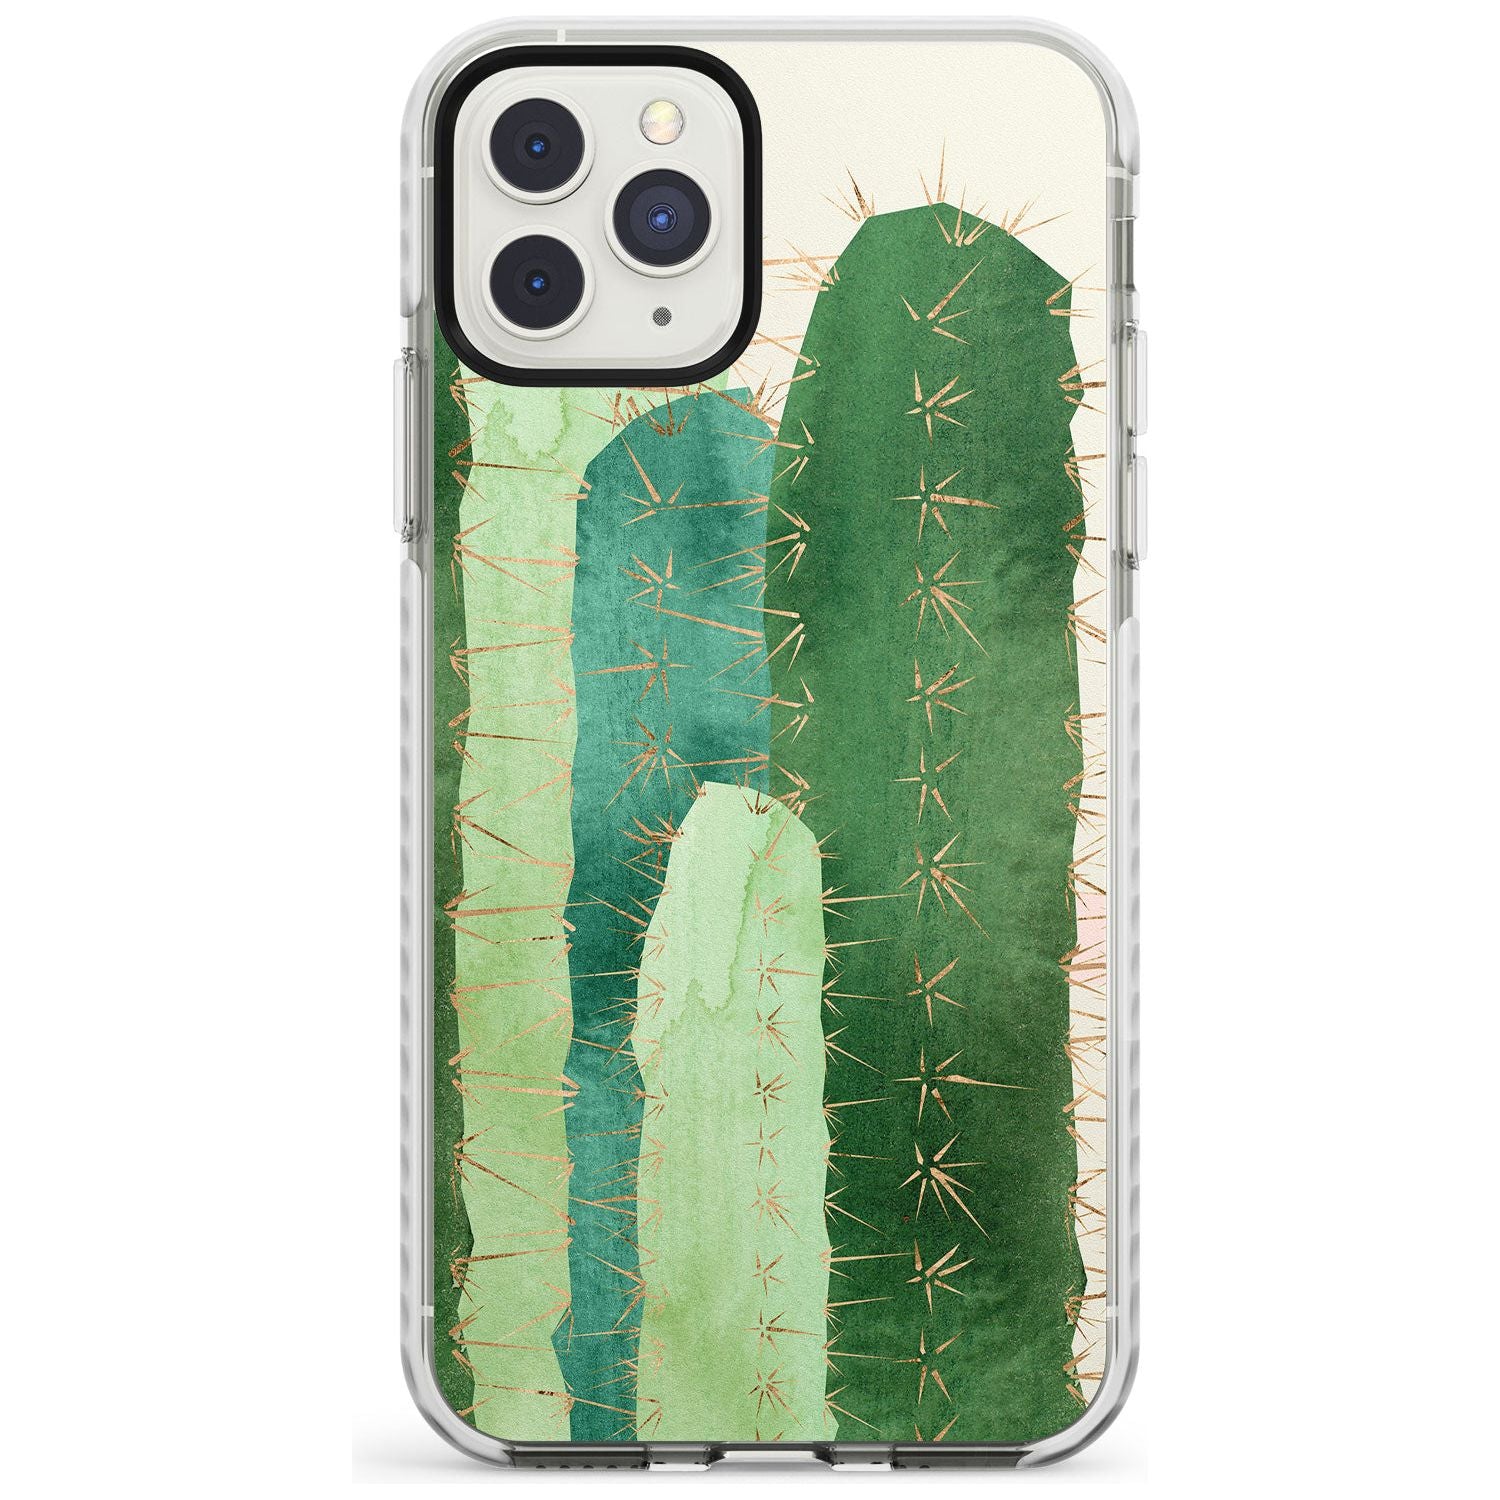 Large Cacti Mix Design Impact Phone Case for iPhone 11 Pro Max